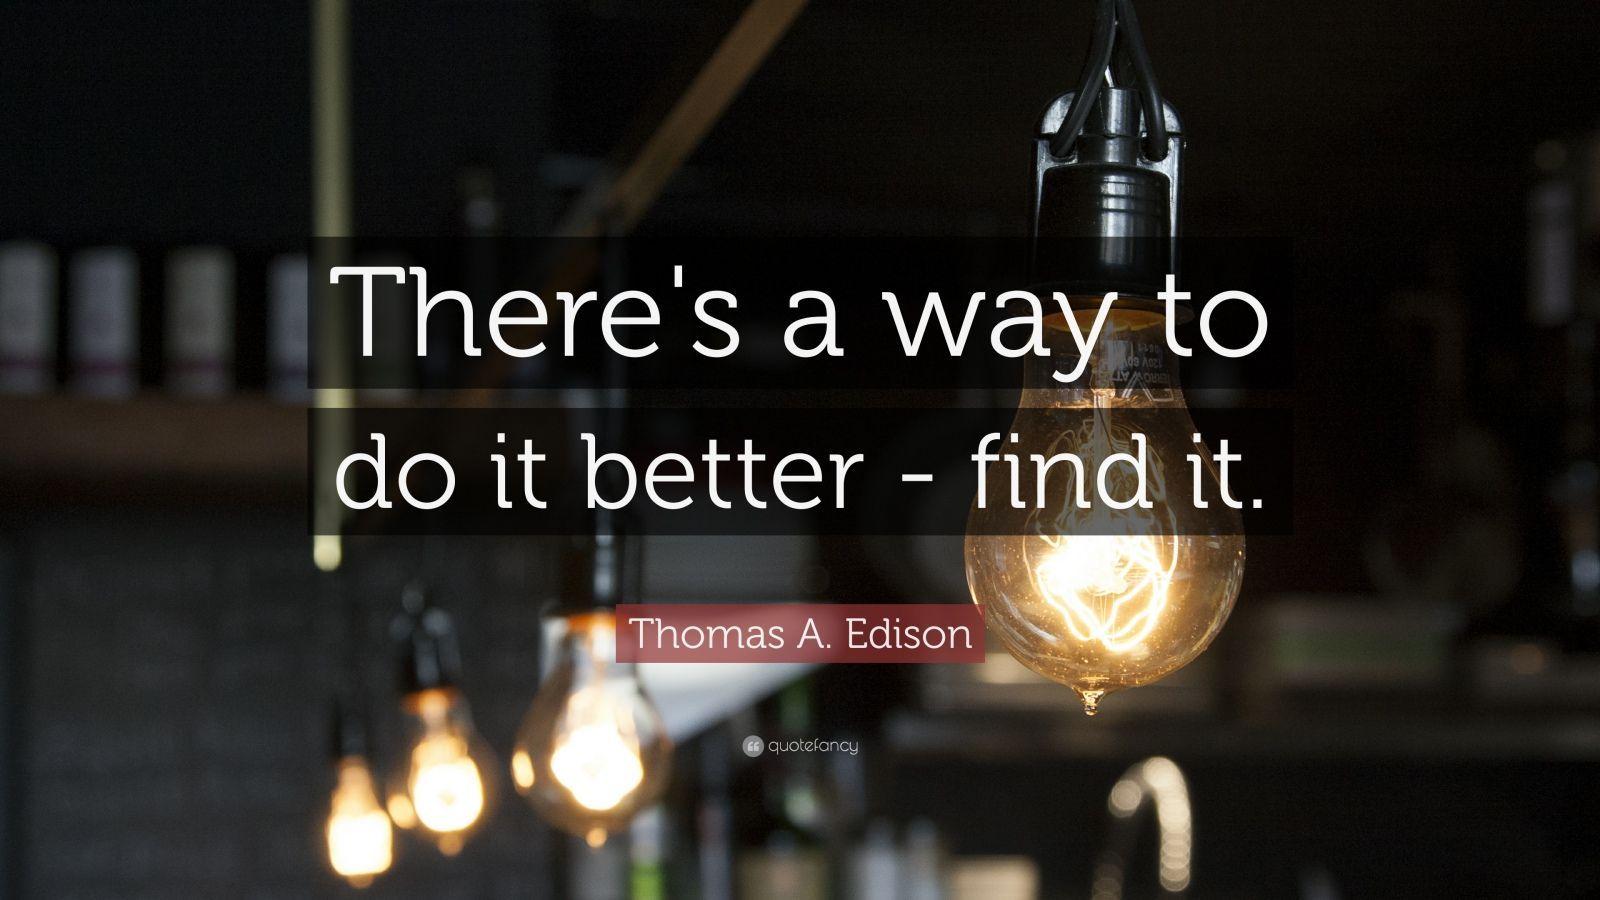 Thomas A. Edison Quotes (100 wallpaper)